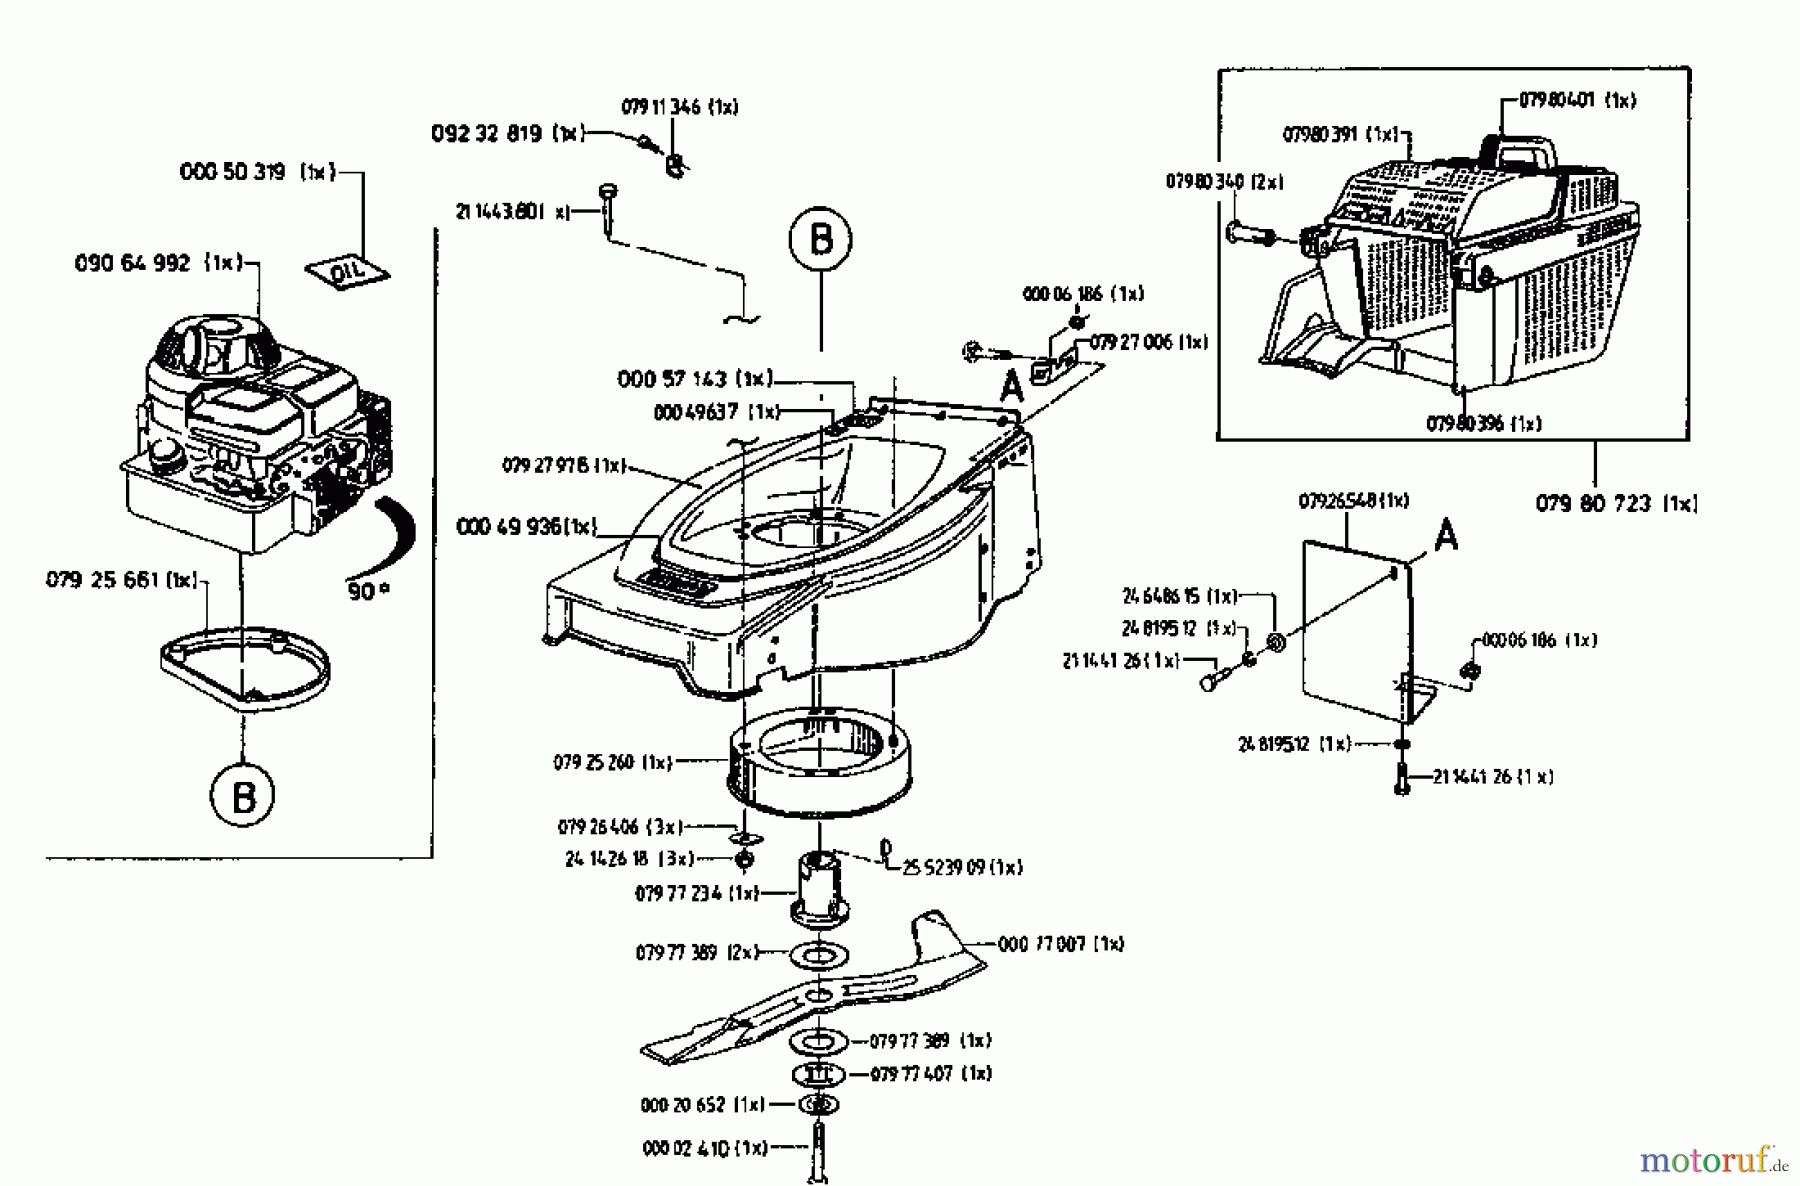  Gutbrod Petrol mower HB 42 04028.01  (1996) Basic machine